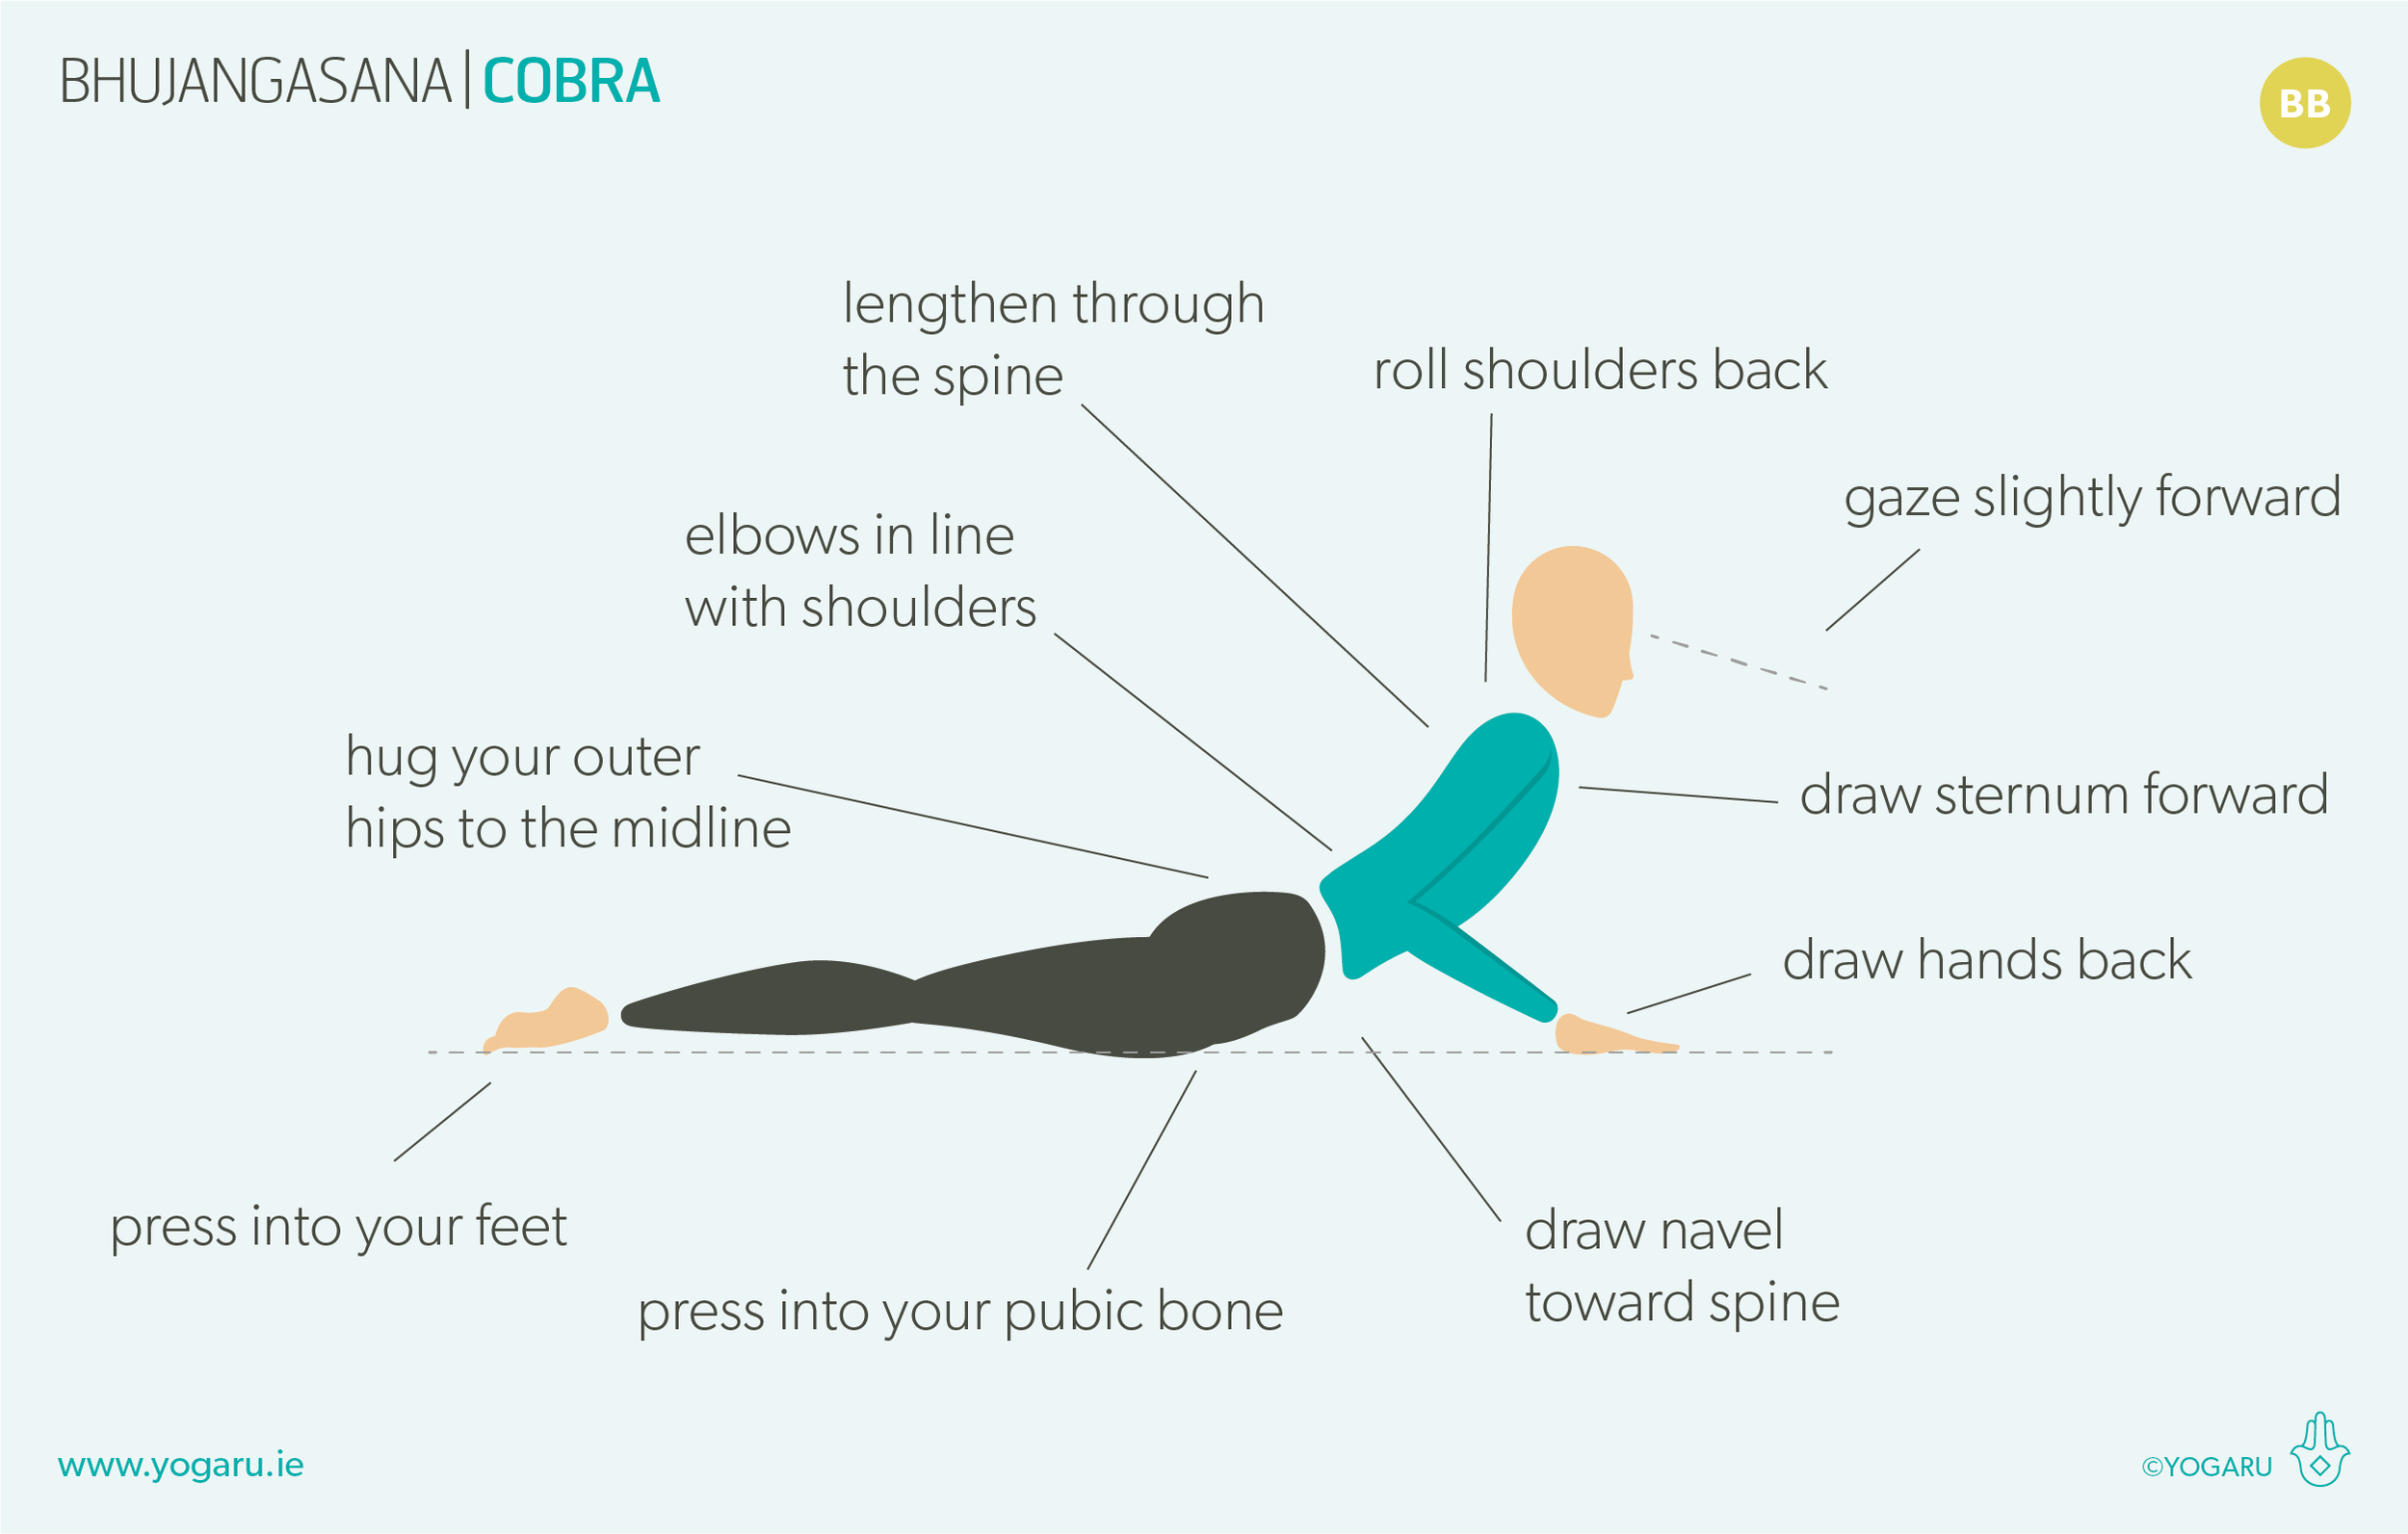 Yoga: Bhujangasana Or Cobra Pose And Its Health Benefits